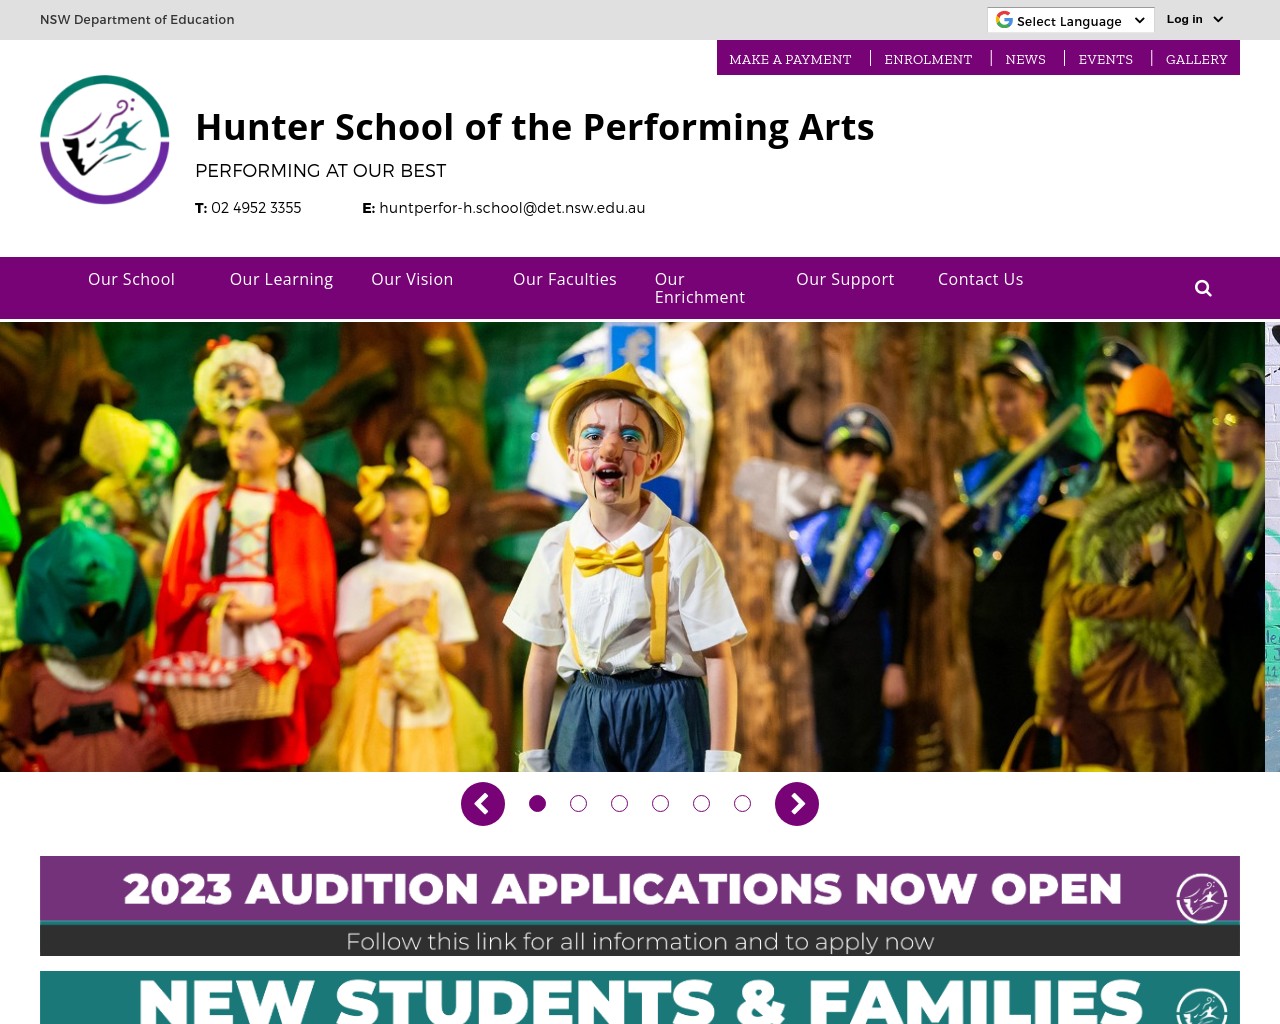 Hunter School of Performing Arts